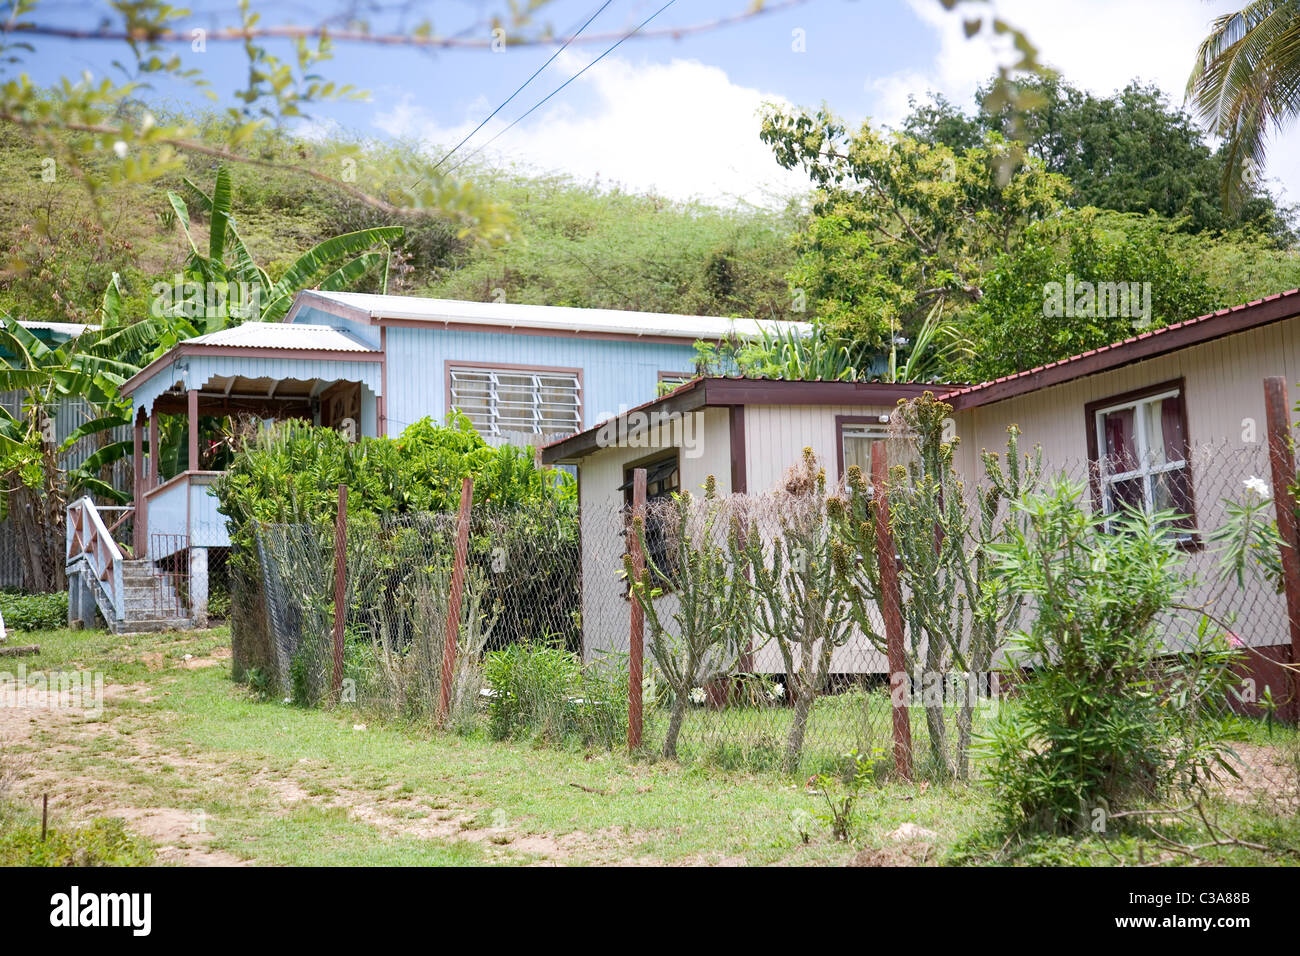 Hattan Village Homes in Antigua Stock Photo - Alamy